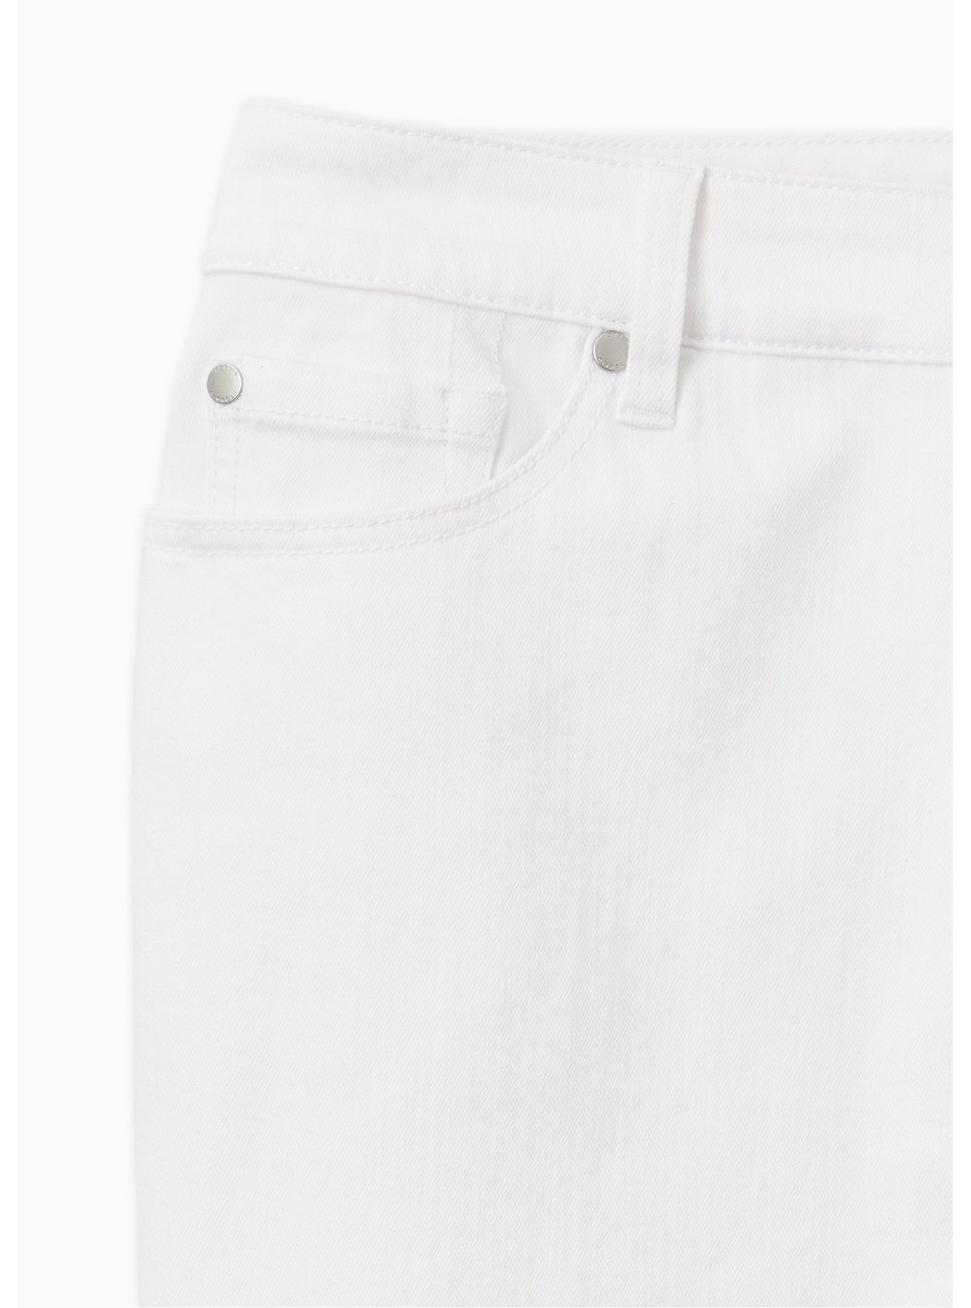 Plus Size - Denim Mini Skirt - White - Torrid